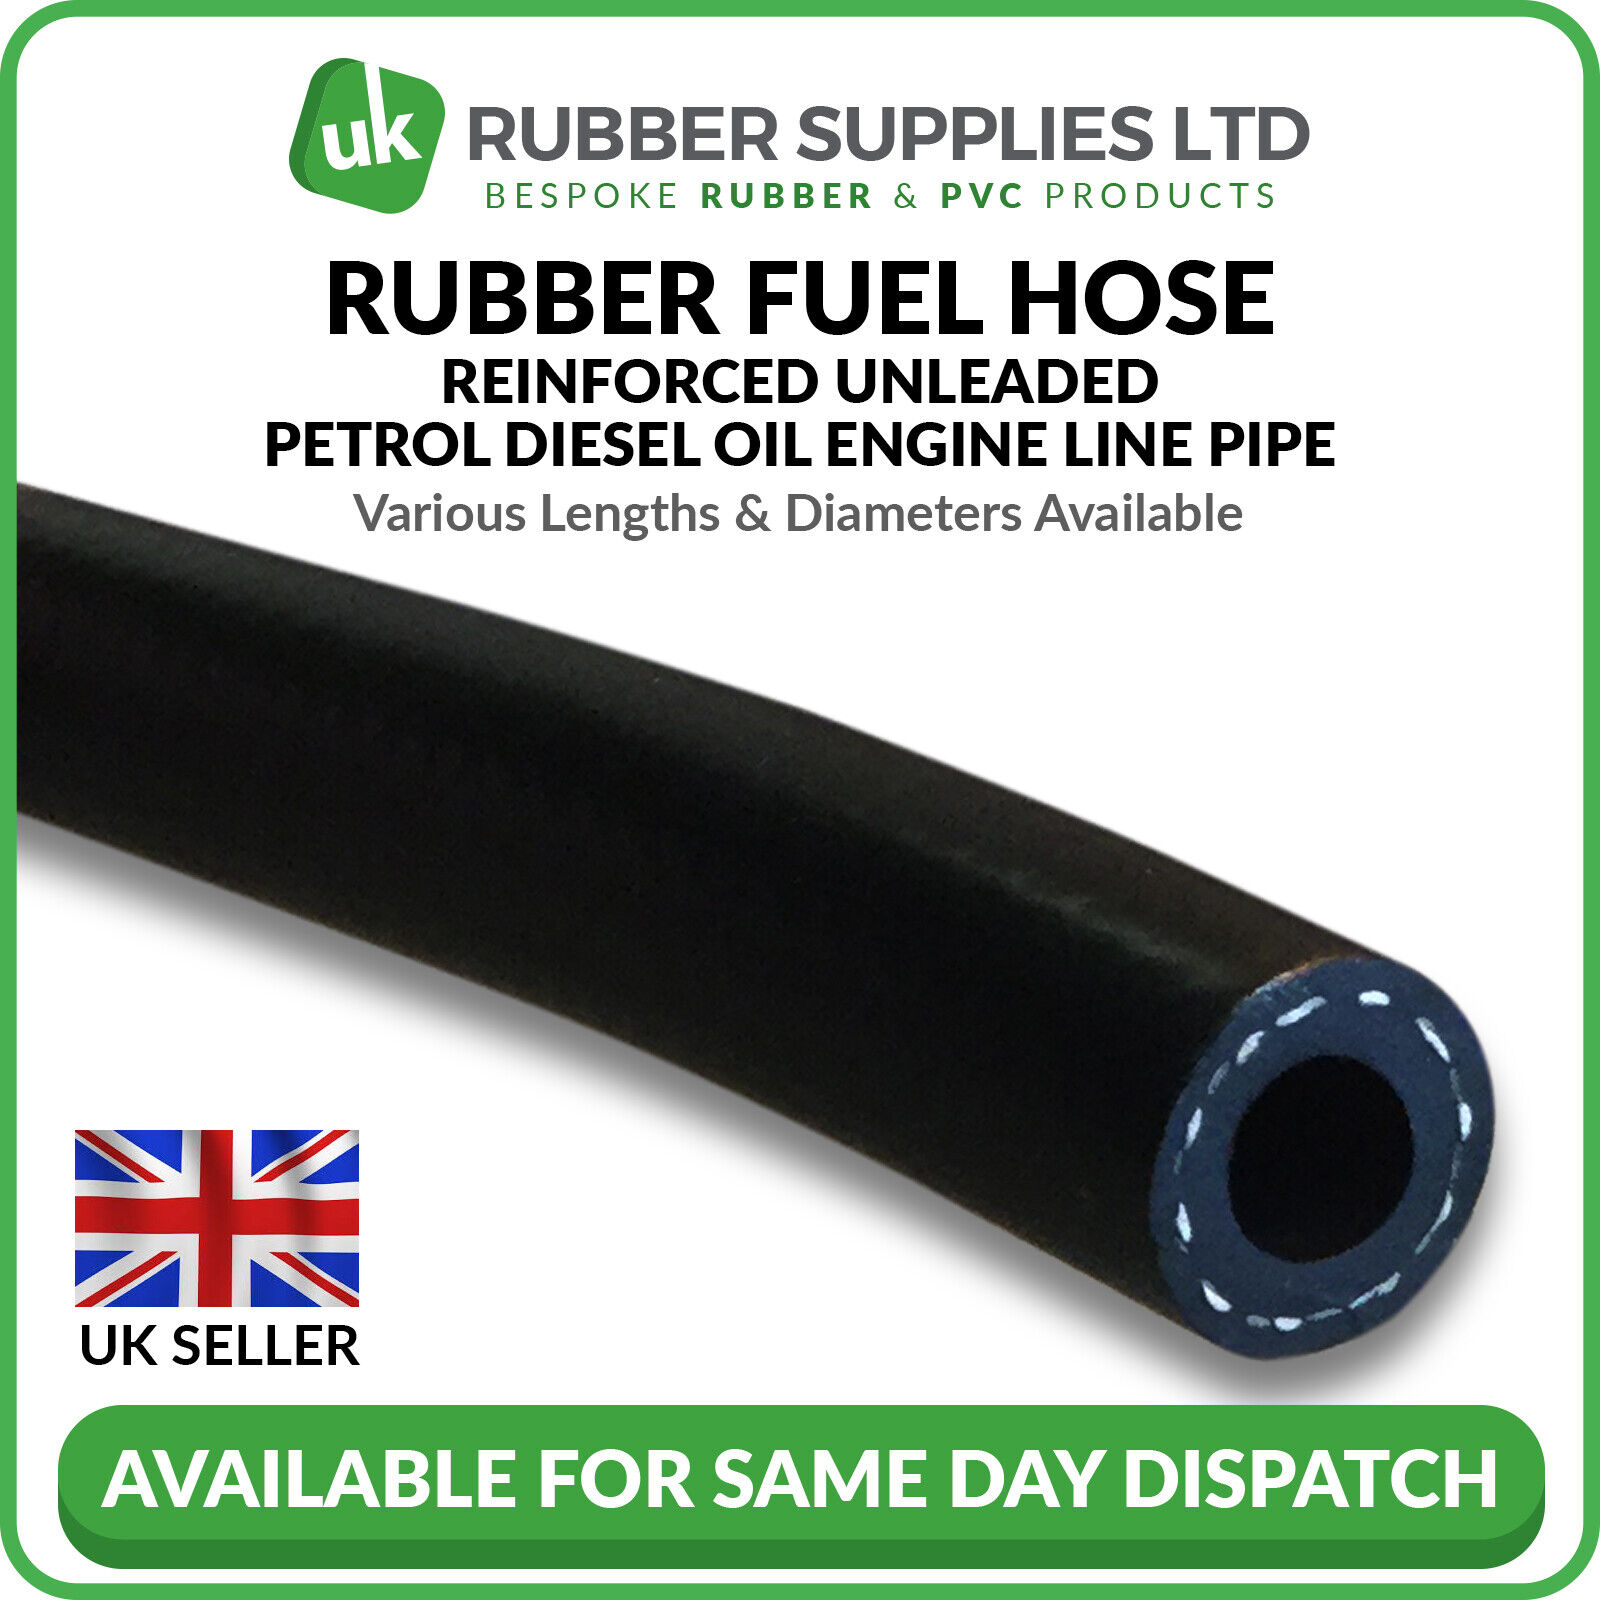 Rubber Fuel Hose Reinforced Unleaded Petrol Diesel Oil Engine Line Pipe Blk E10 Natychmiastowa dostawa w zwykłym sklepie